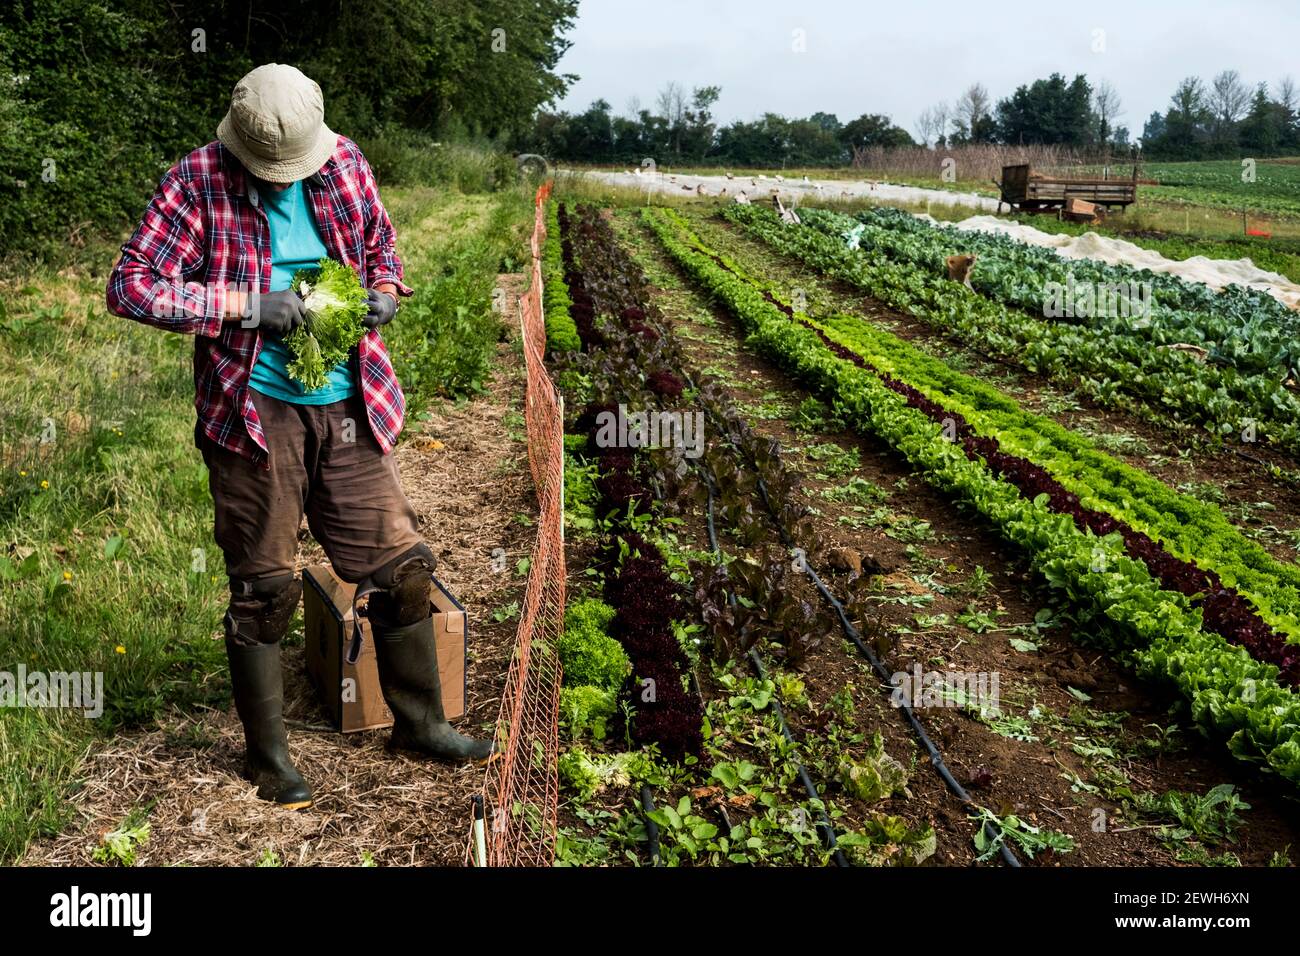 Man harvesting salad leaves on a farm. Stock Photo